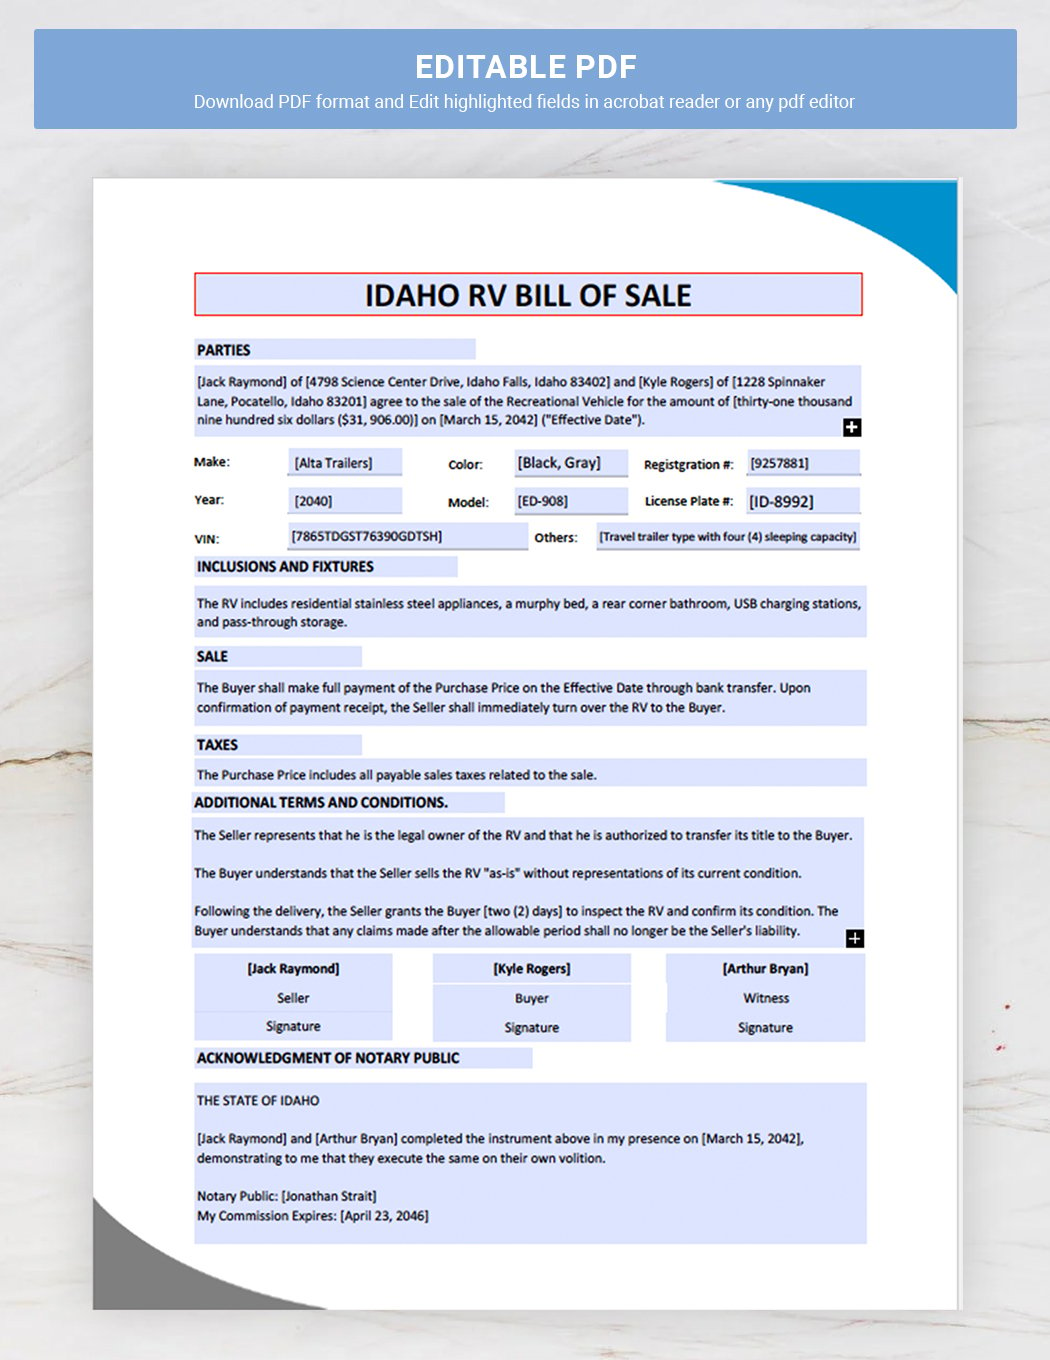 Idaho RV Bill of Sale Form Template